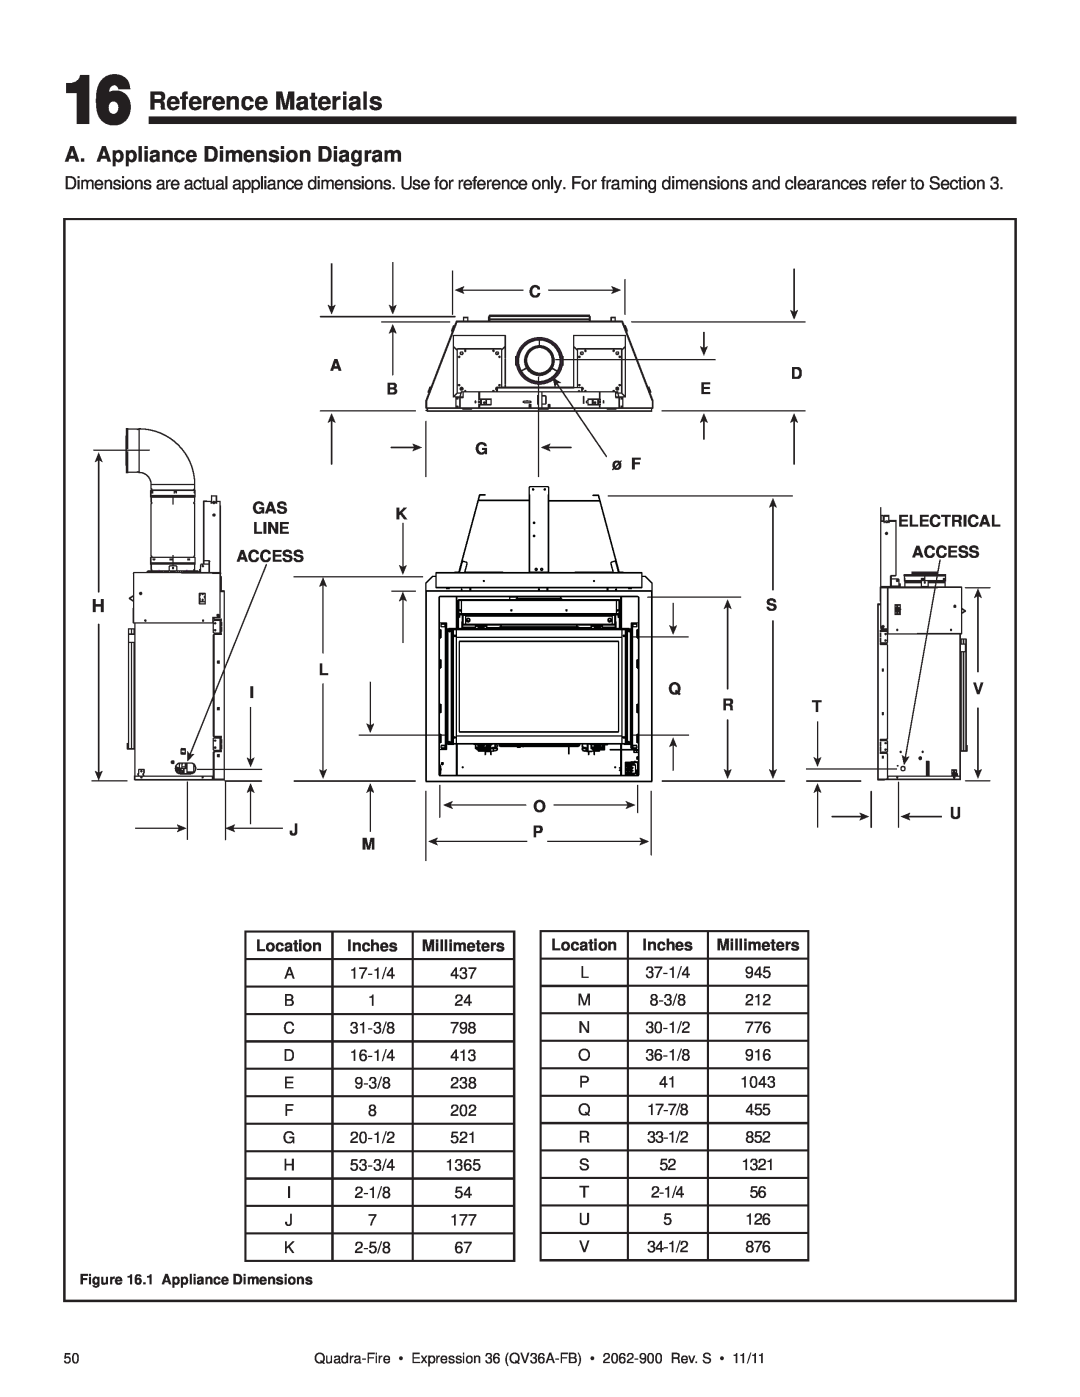 Quadra-Fire QV36A-FB Reference Materials, A. Appliance Dimension Diagram, Line, C D E G ø F, Electrical Access, Inches 